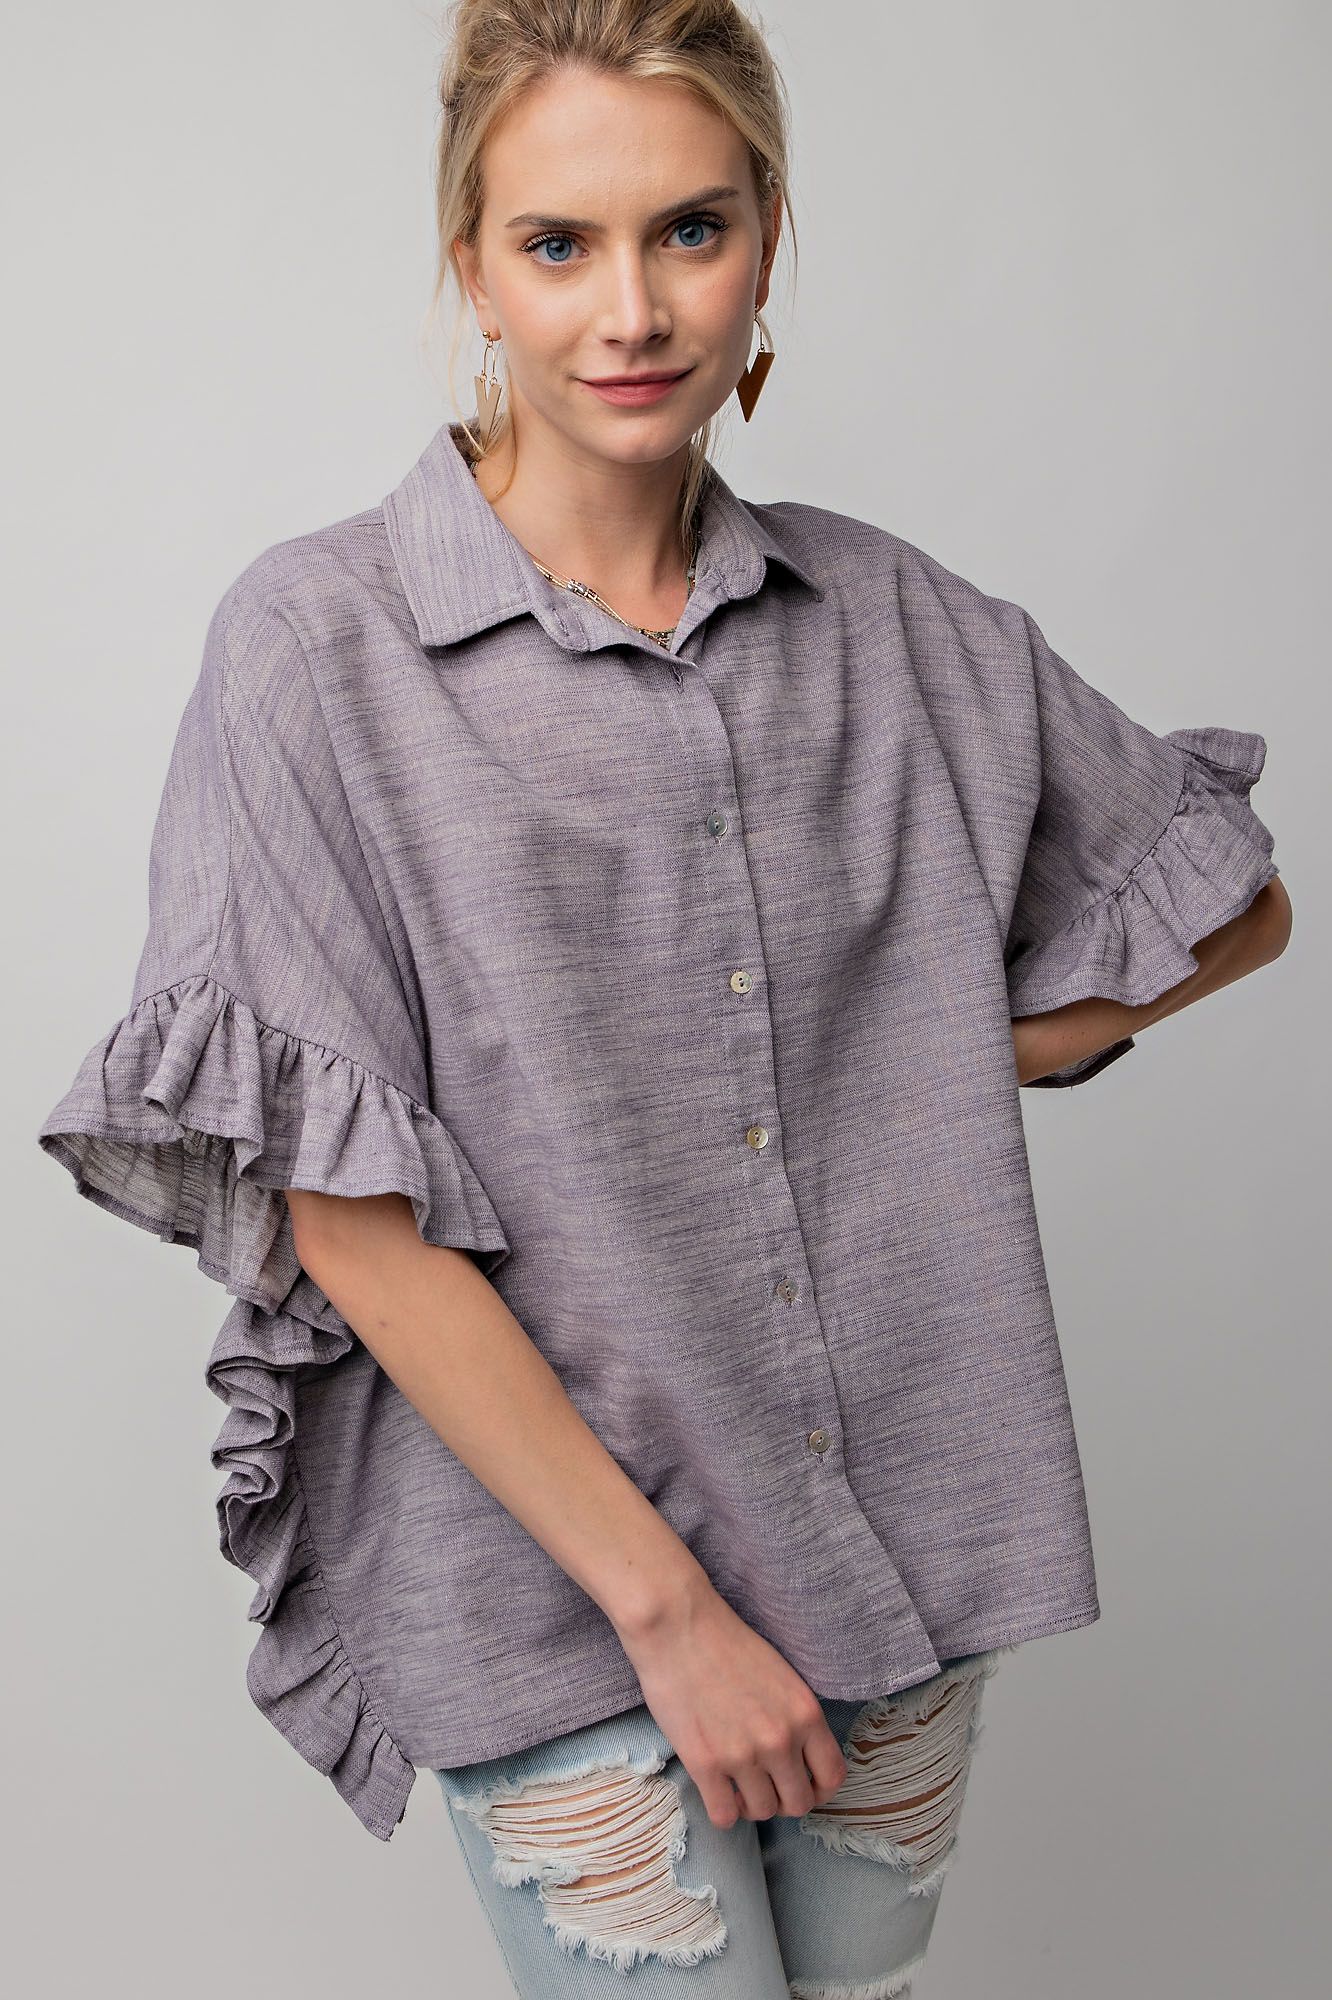 Easel Melange Cotton Linen Collared Neck Button Down Oversized Top - Roulhac Fashion Boutique